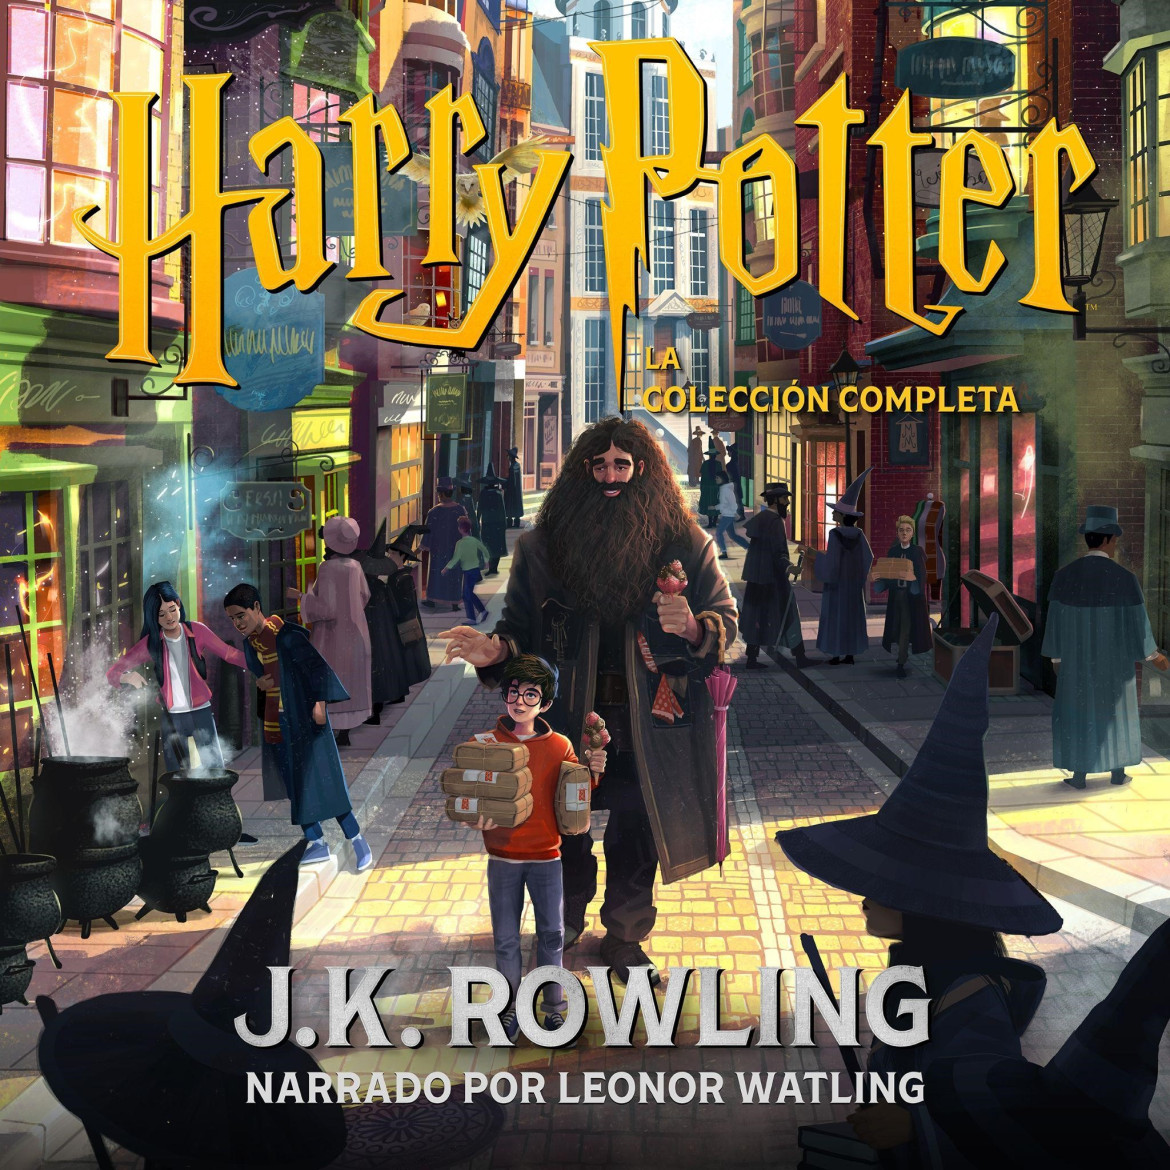 ‘Harry Potter’